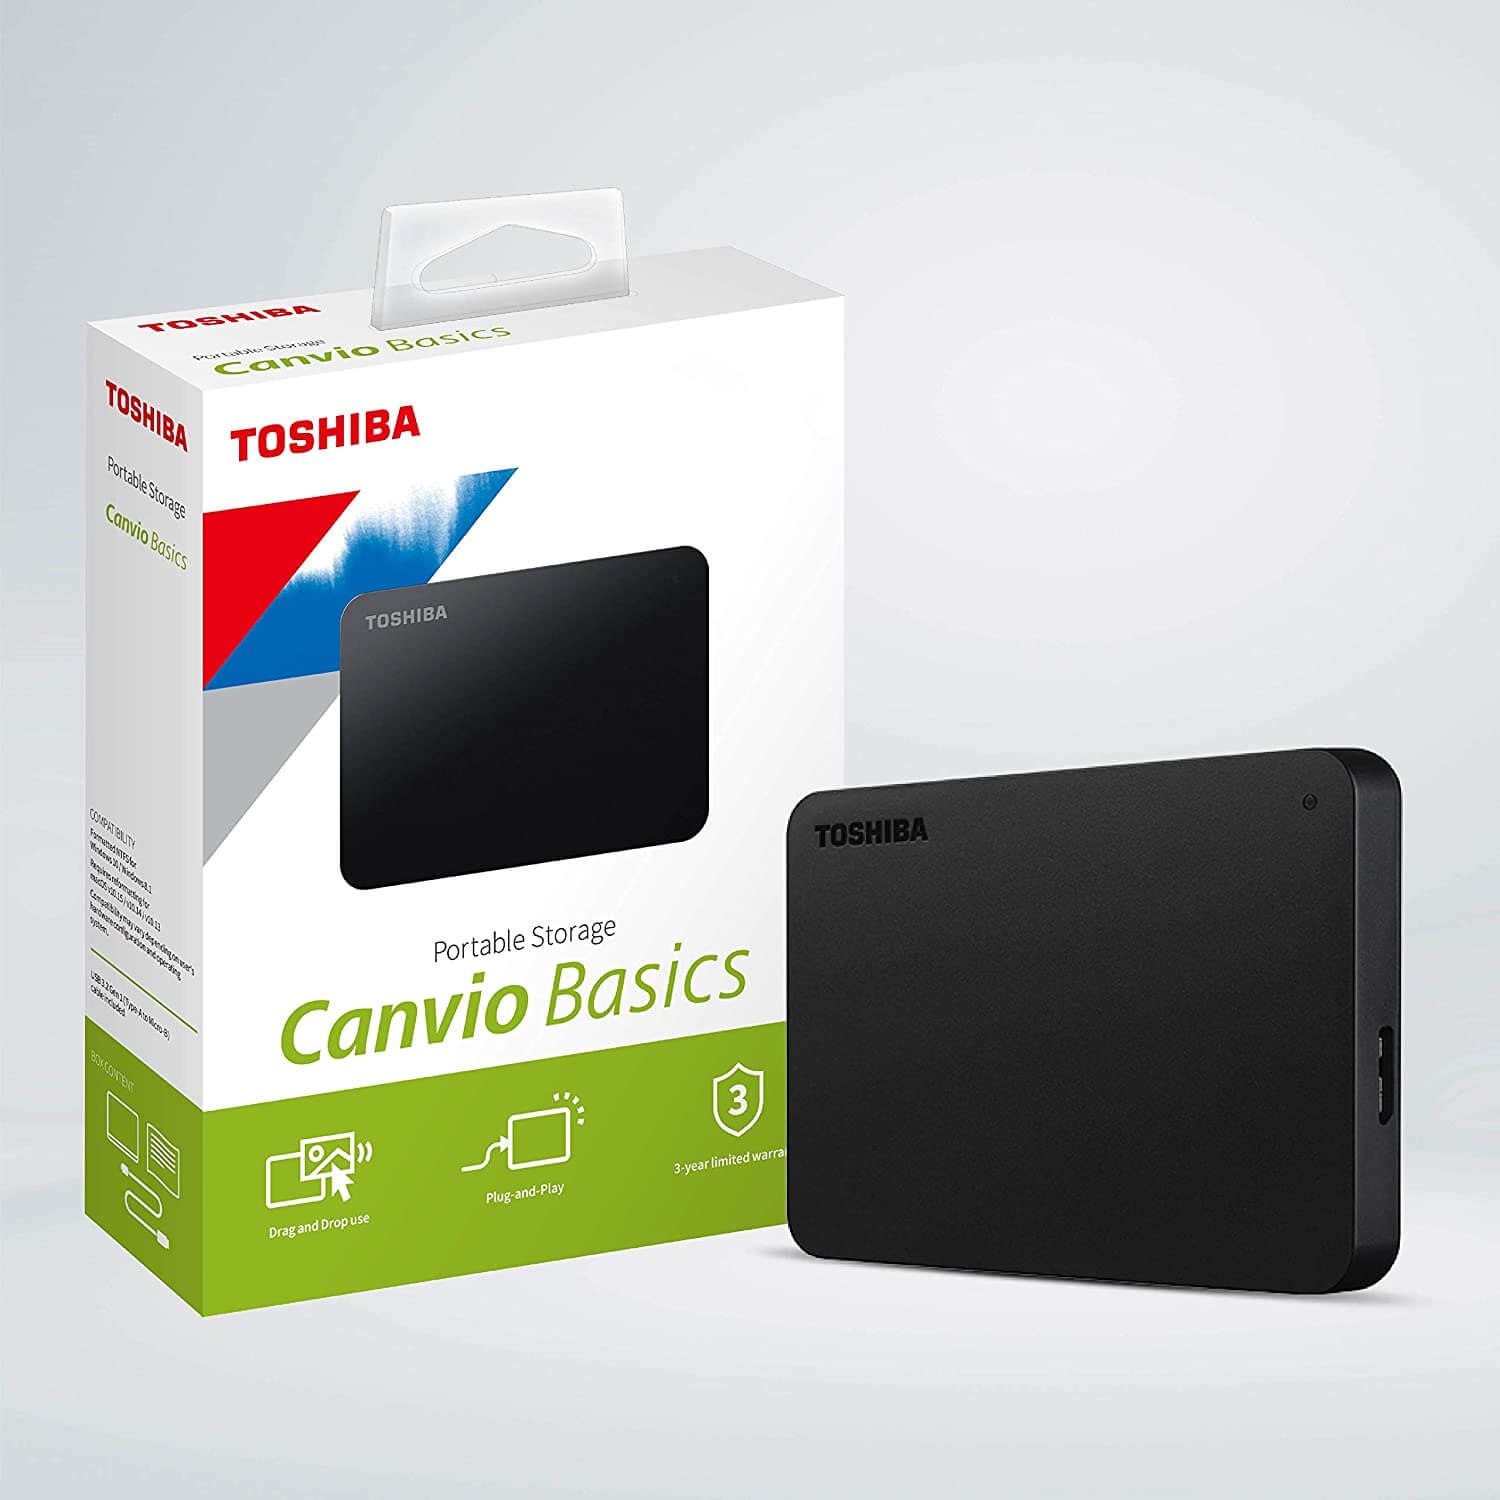 https://shoppingyatra.com/product_images/Toshiba Canvio Basics 2TB Portable External HDD3.jpg